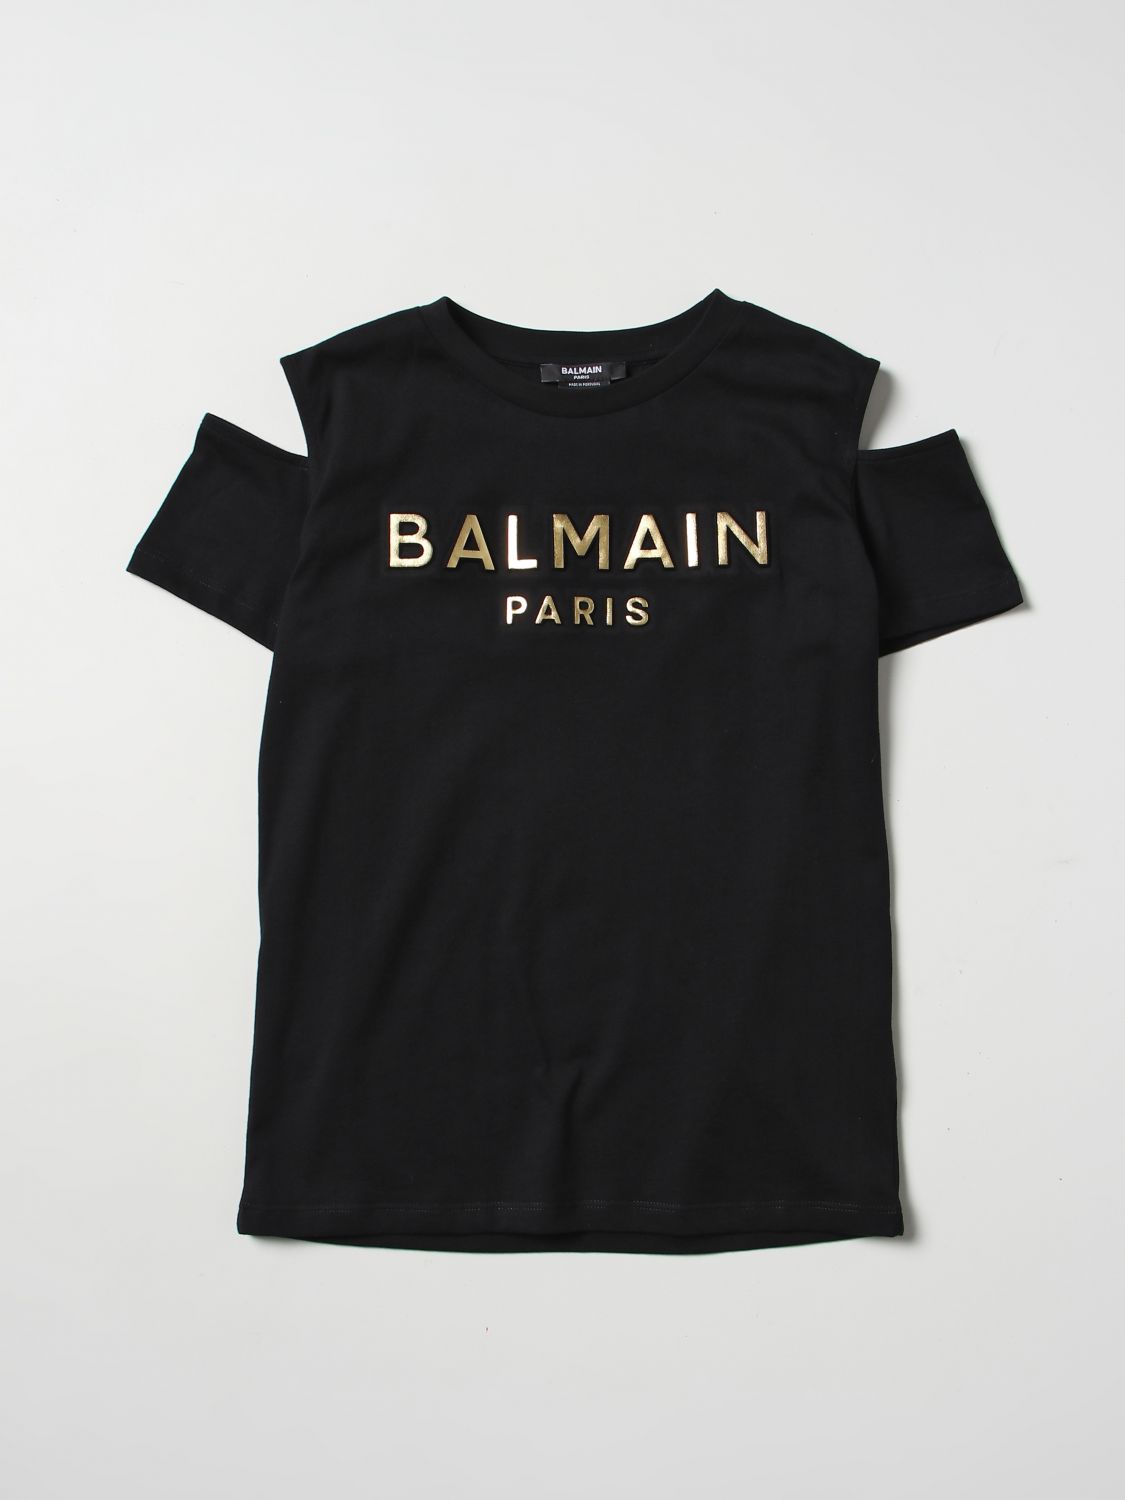 BALMAIN T-SHIRT BALMAIN KIDS KIDS,D82883002